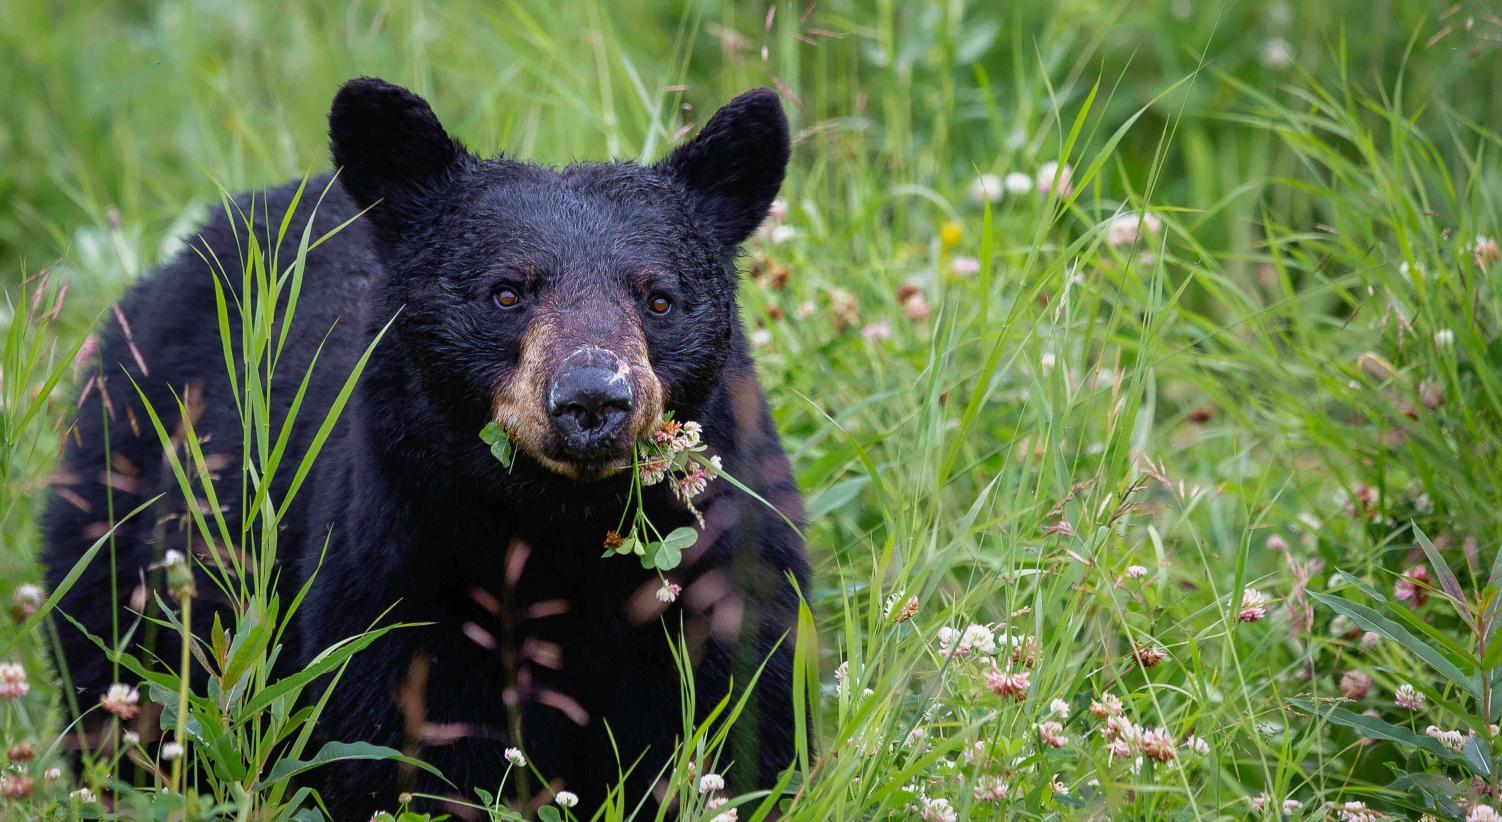 I migliori lodge per il bear watching in British Columbia